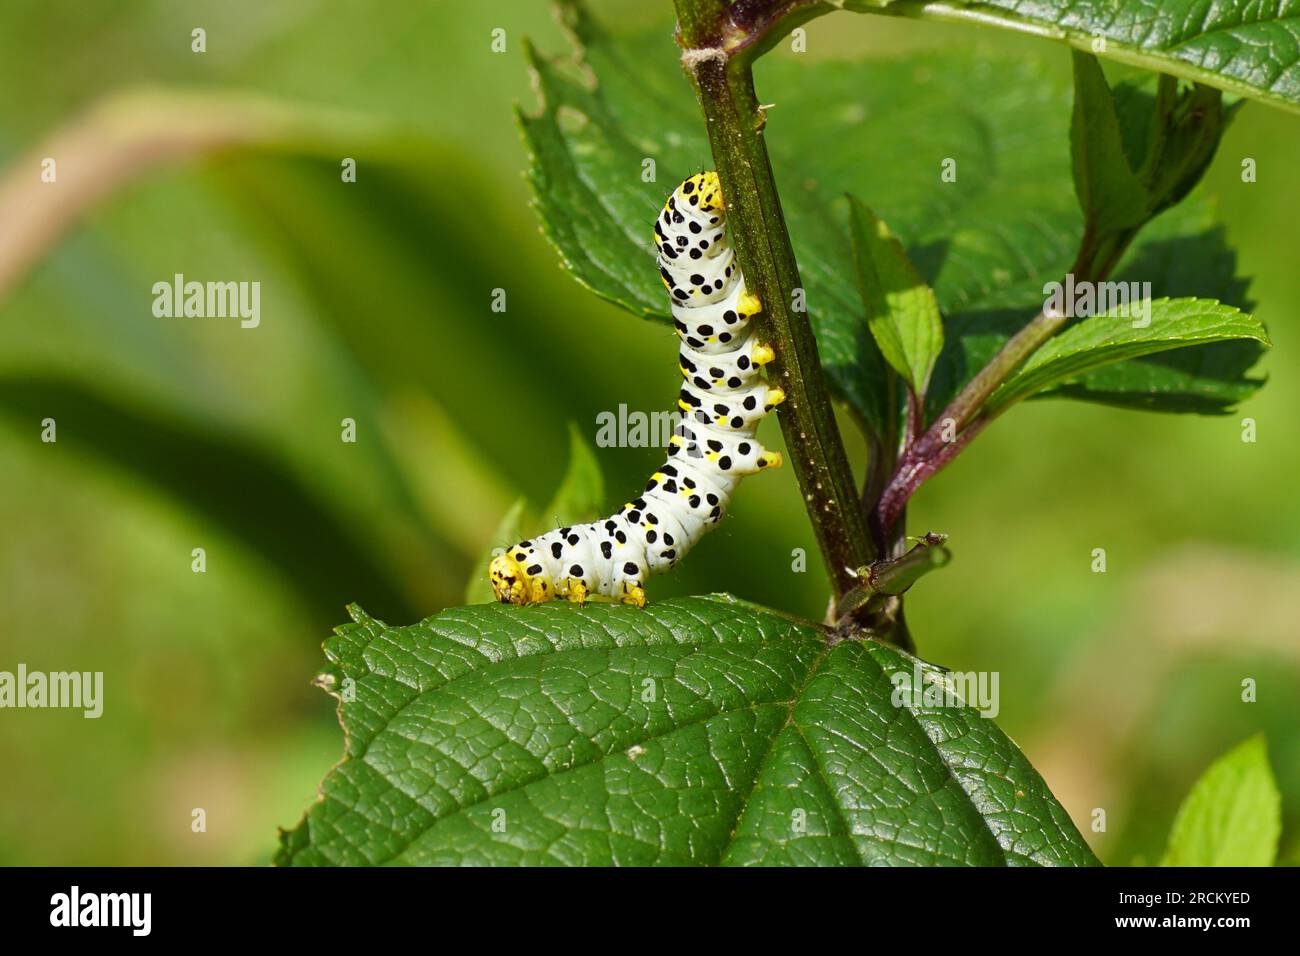 Caterpillar of Water Betony (Cucullia scrophulariae). Family Owlet moths (Noctuidae). On Common figwort (Scrophularia nodosa). Summer, Dutch garden, Stock Photo